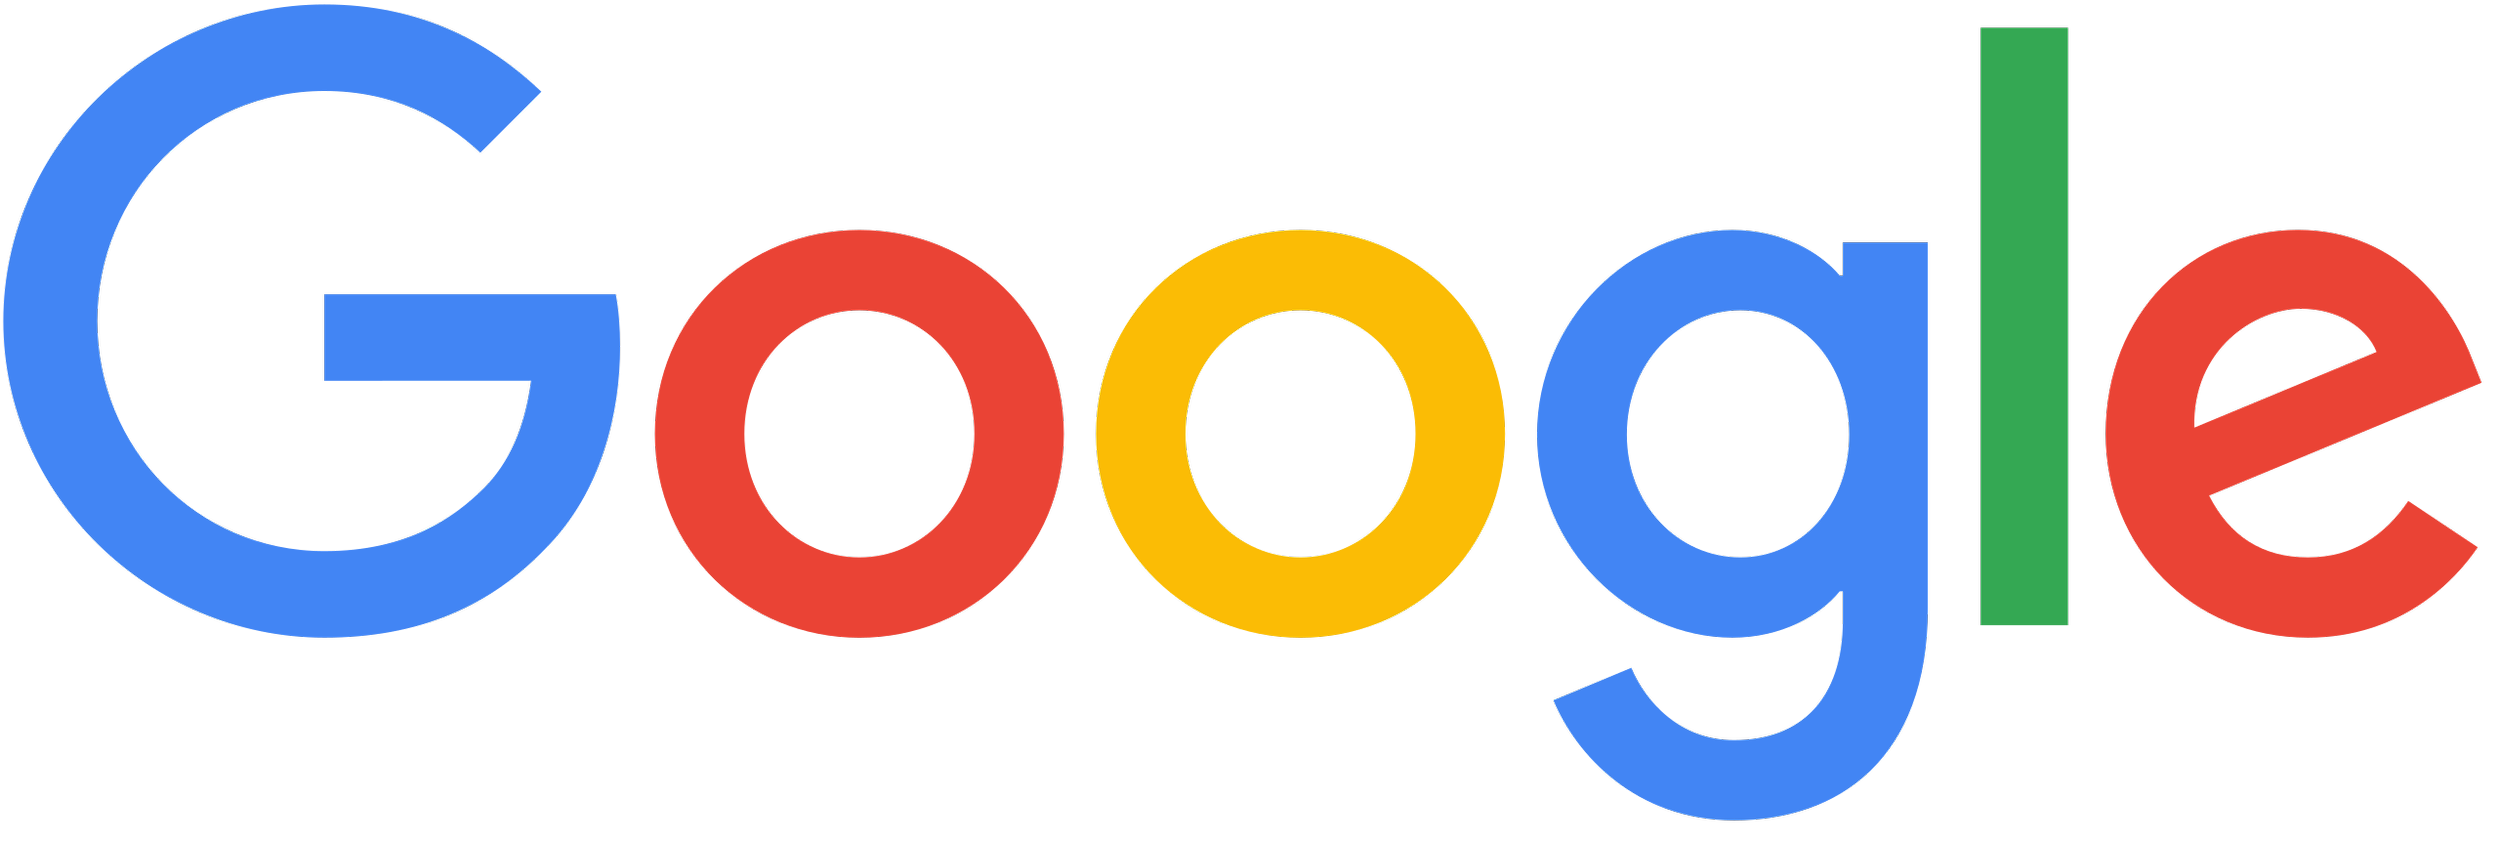 Google Logo - StormStock.png